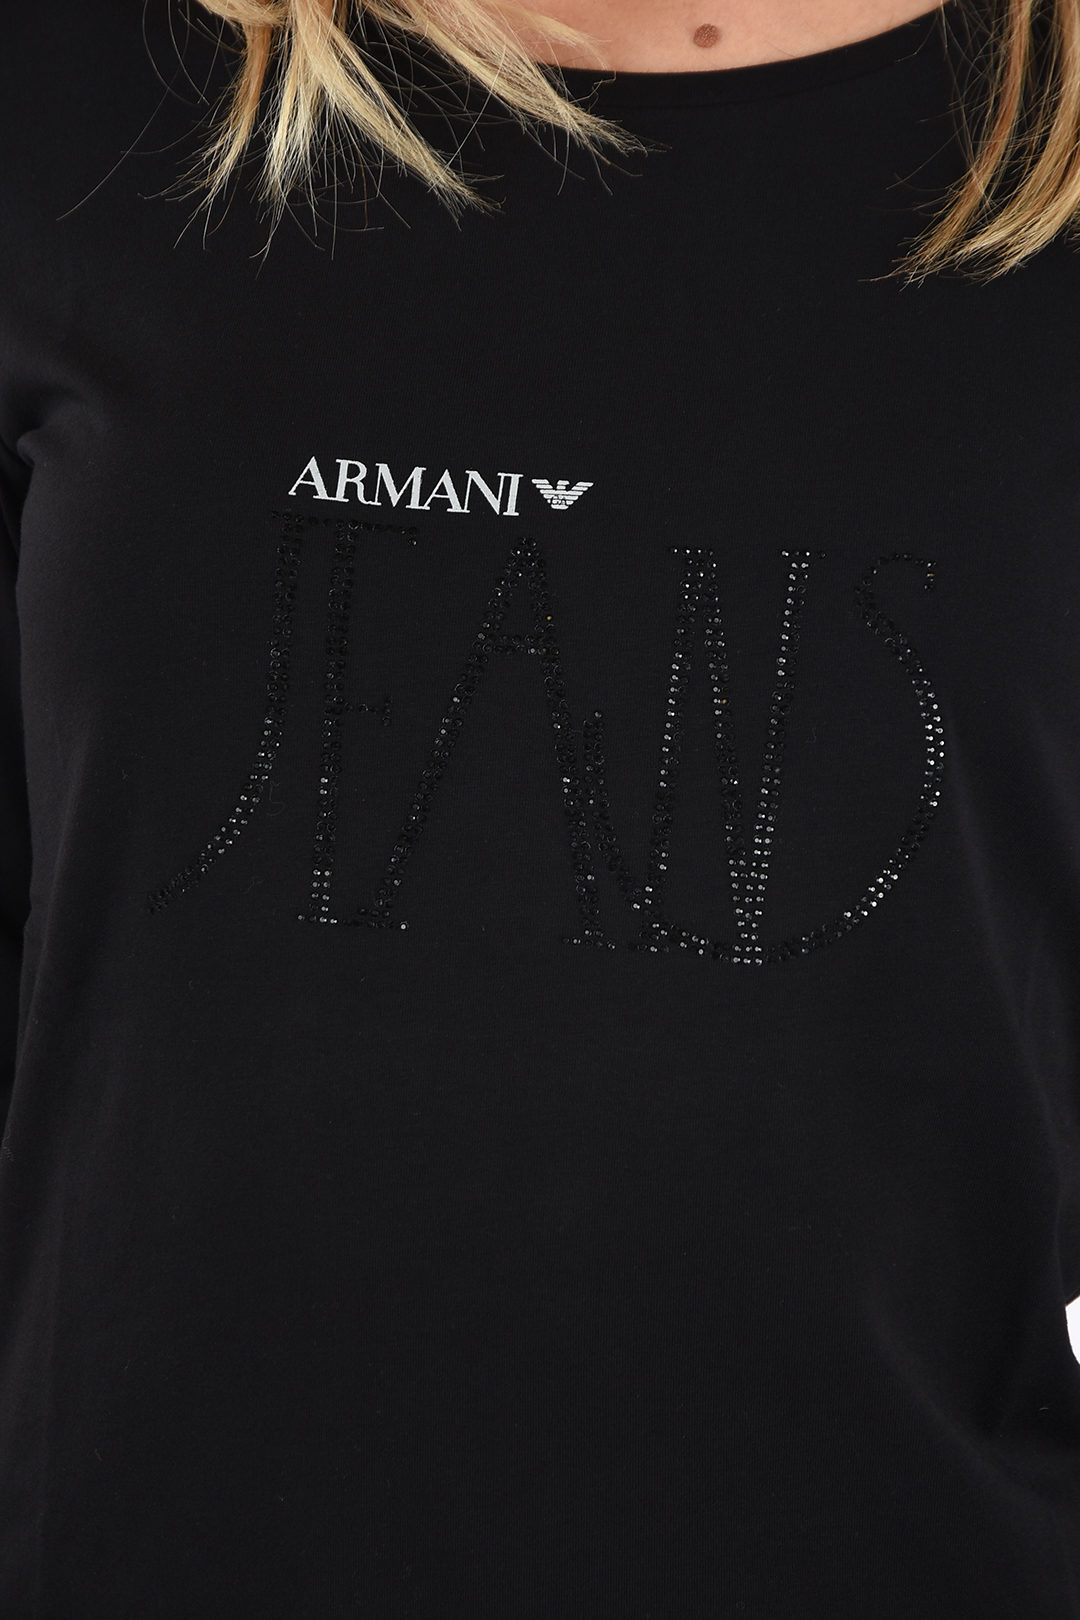 zebra Regeringsforordning skraber Armani ARMANI JEANS T-SHIRT women - Glamood Outlet